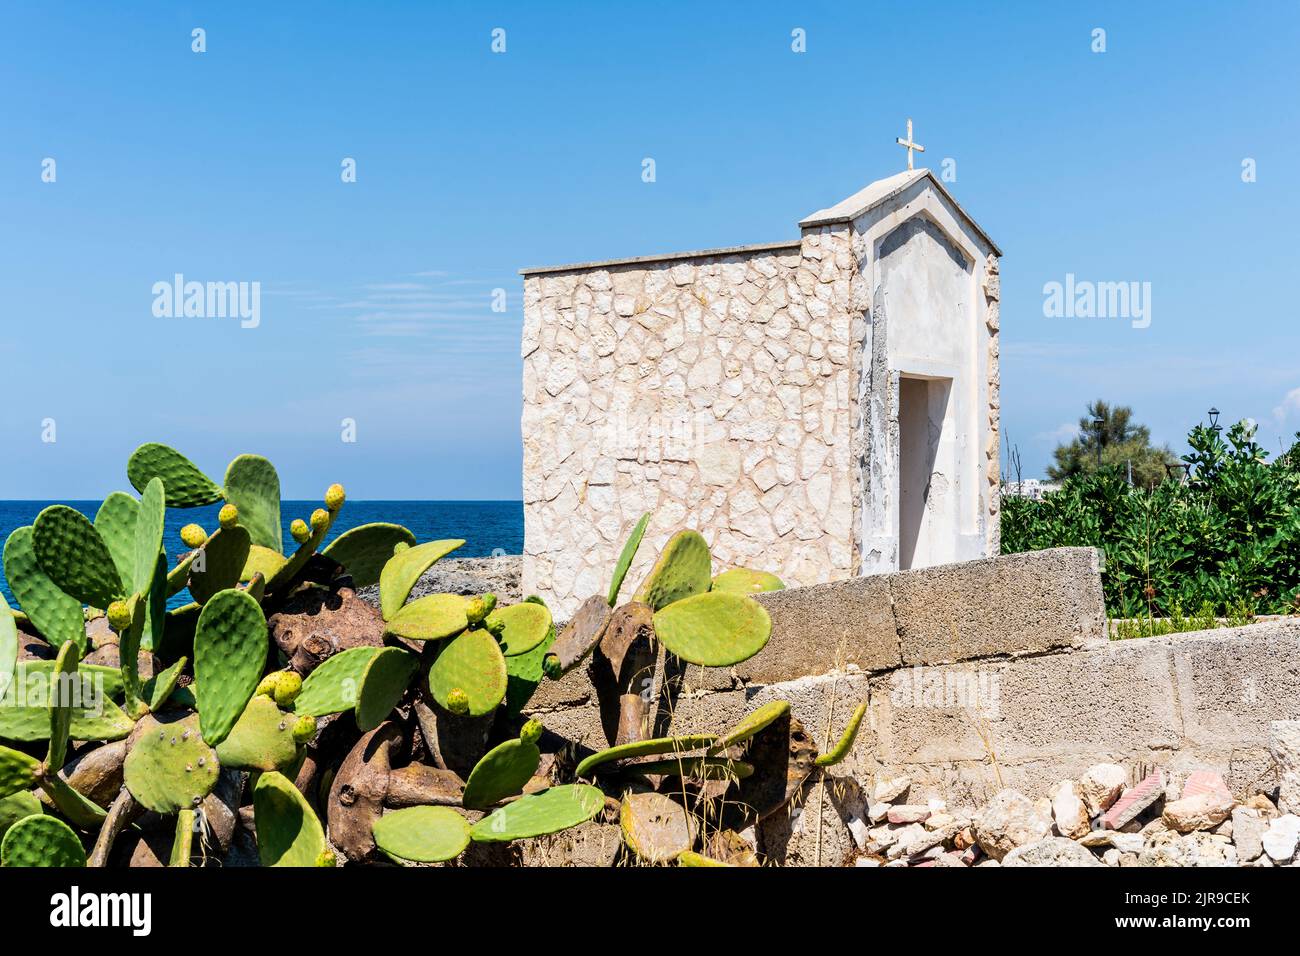 Catholic oratory along the rocky shore with prickly pears, in Mancaversa, marina of Taviano, Salento, Puglia, Southern Italy Stock Photo